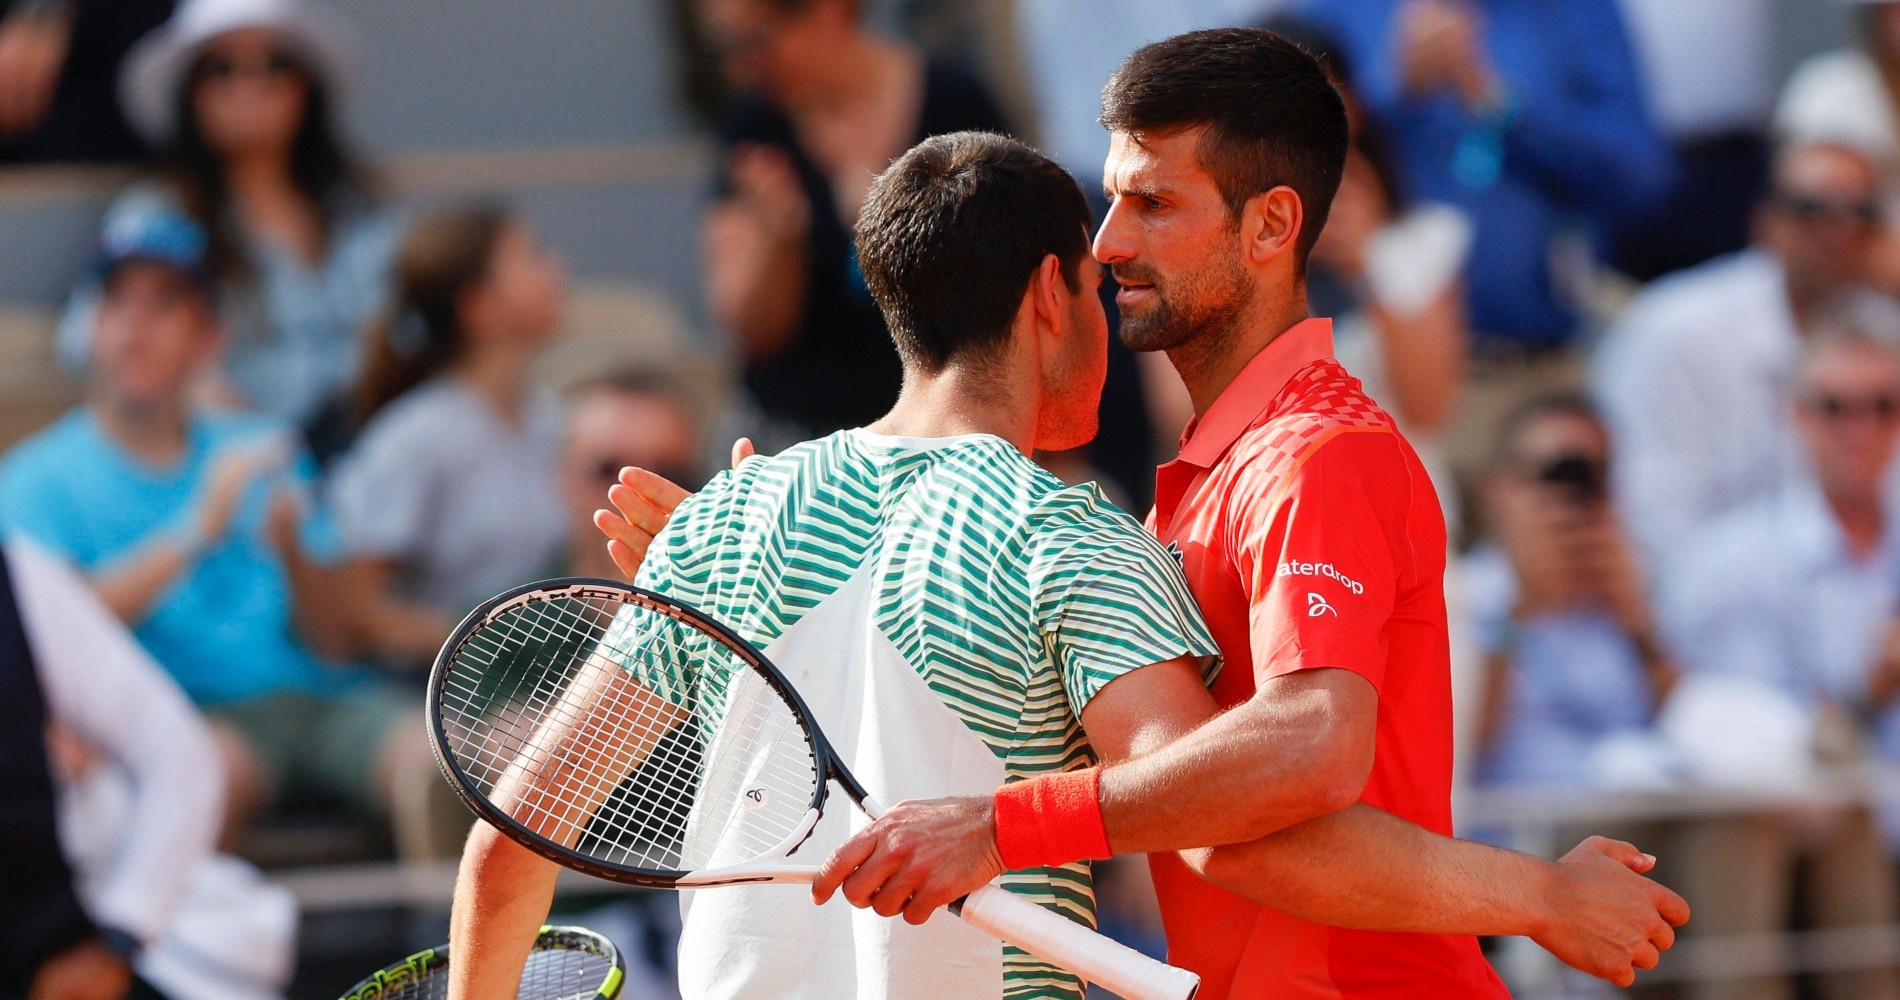 Djokovic backs Alcaraz for success after RolandGarros cramp “He’s got